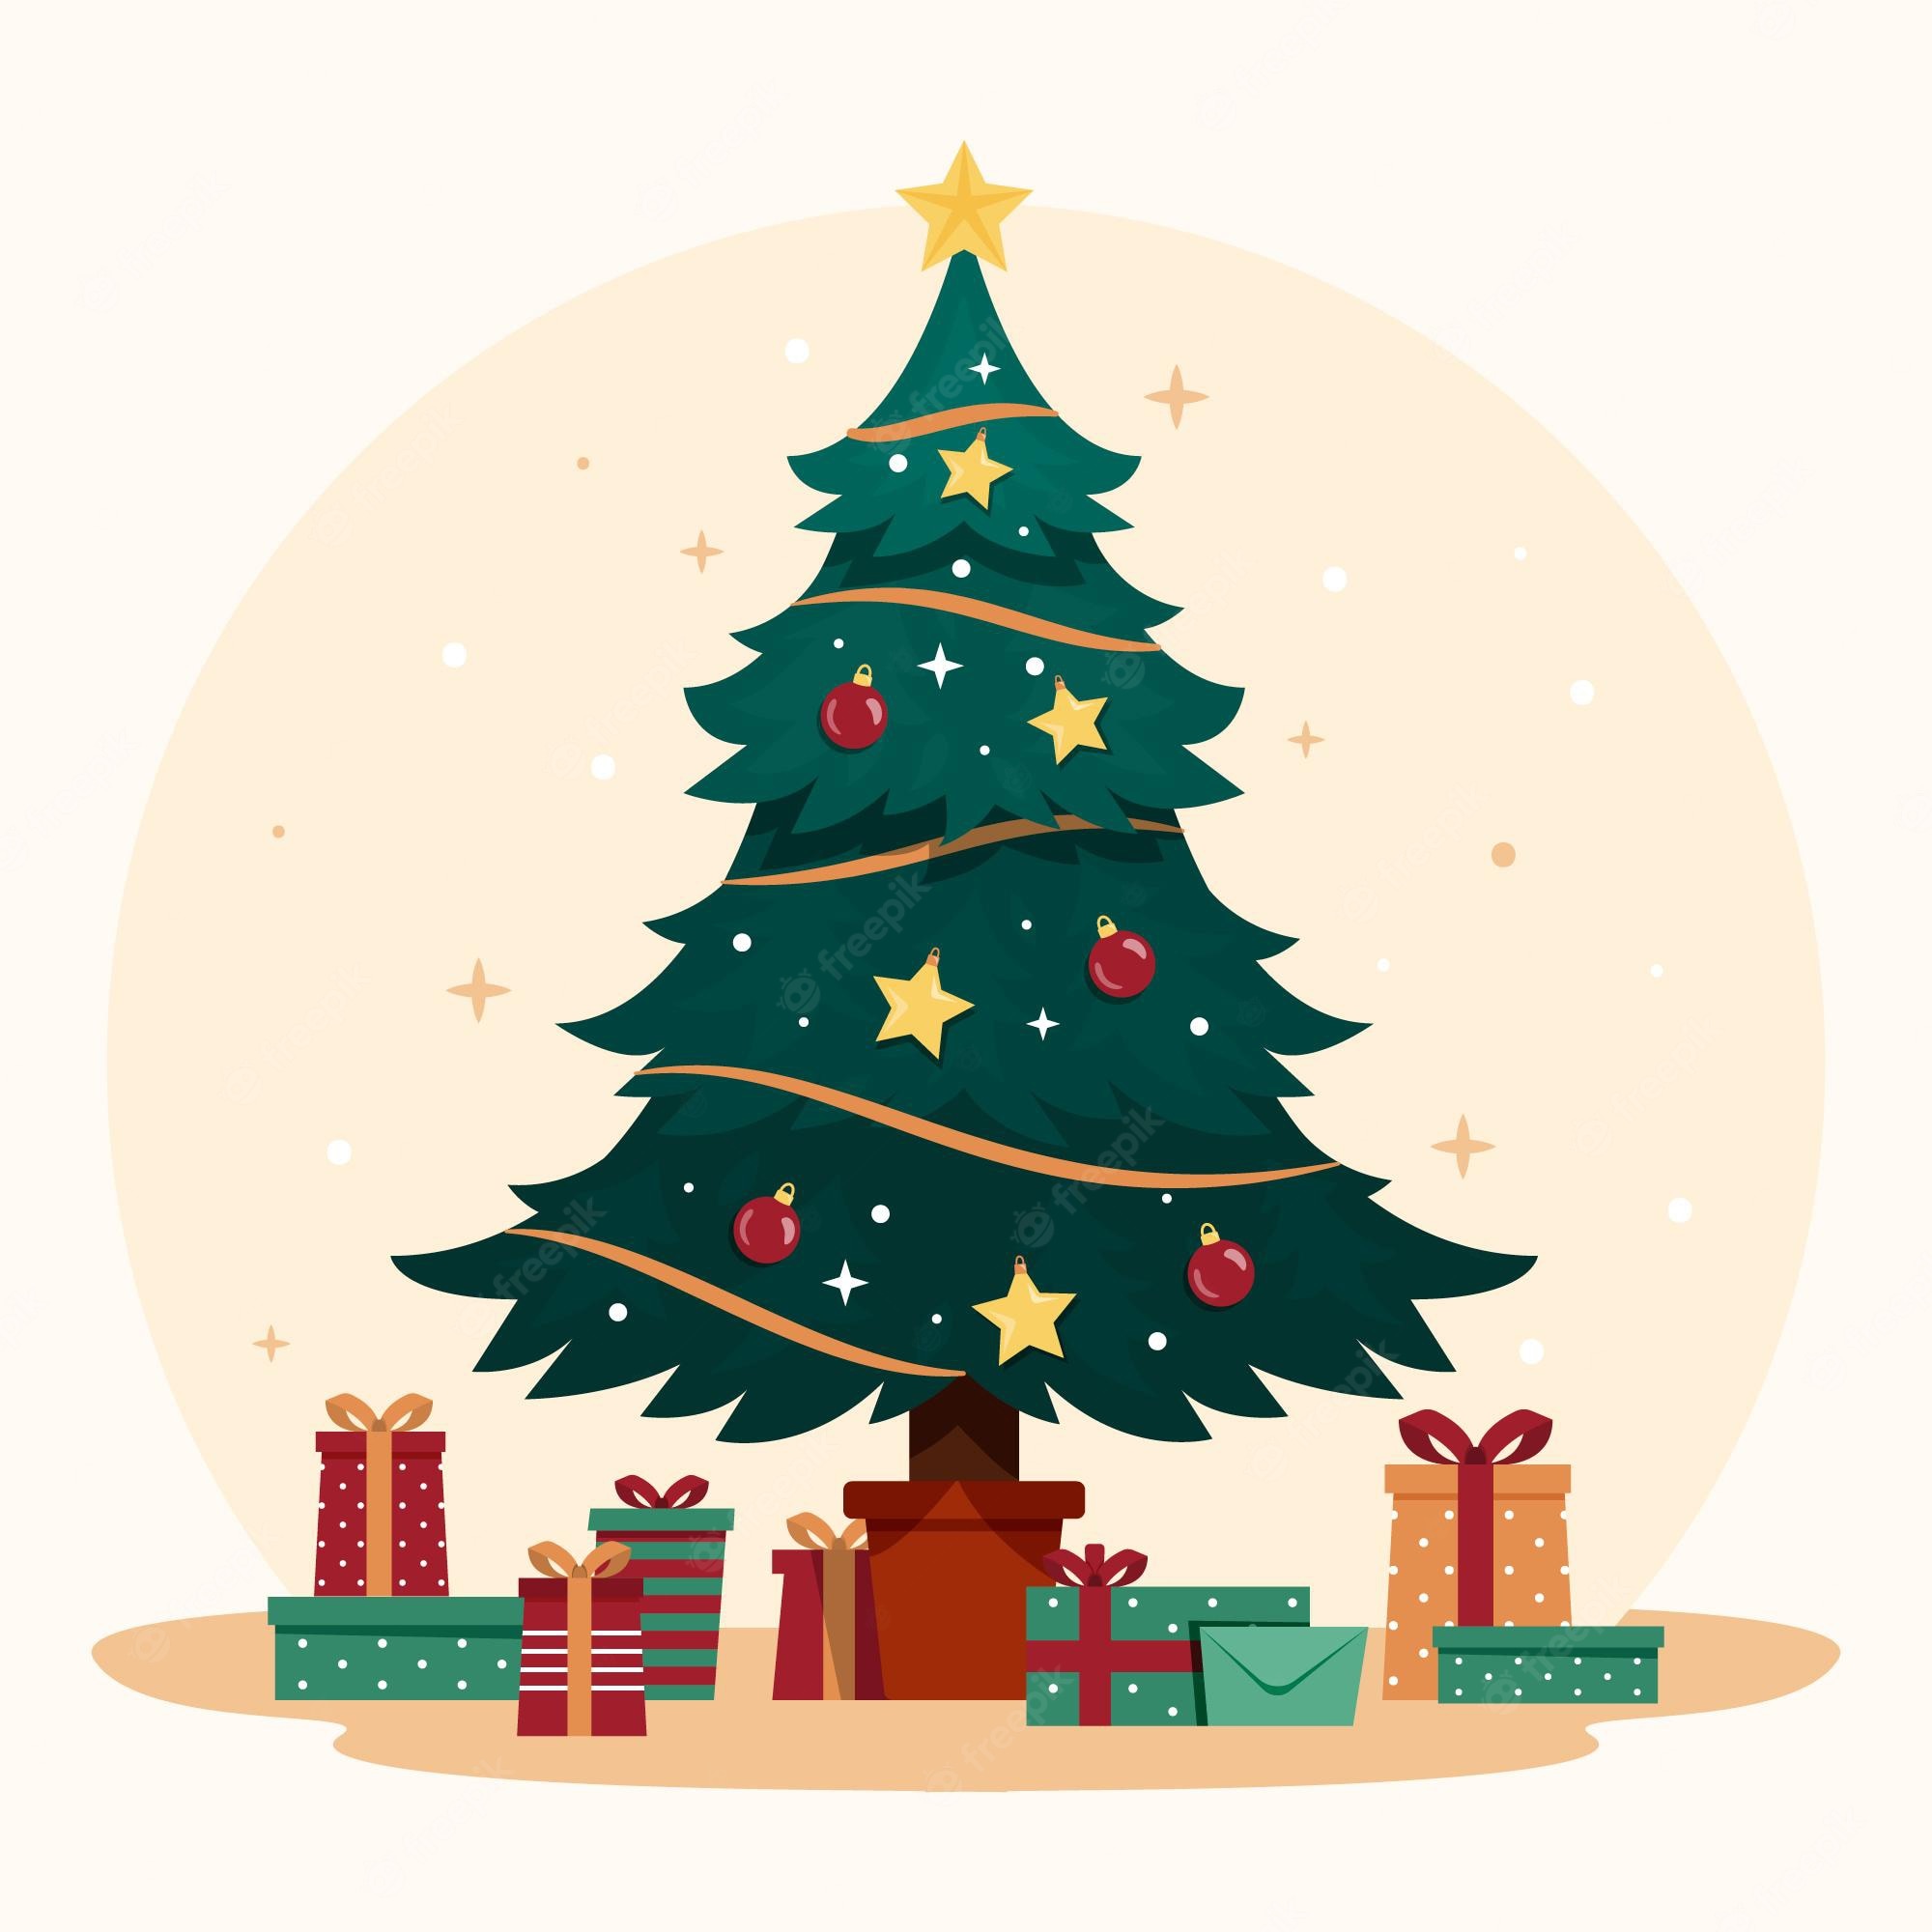 Christmas tree Image. Free Vectors, & PSD